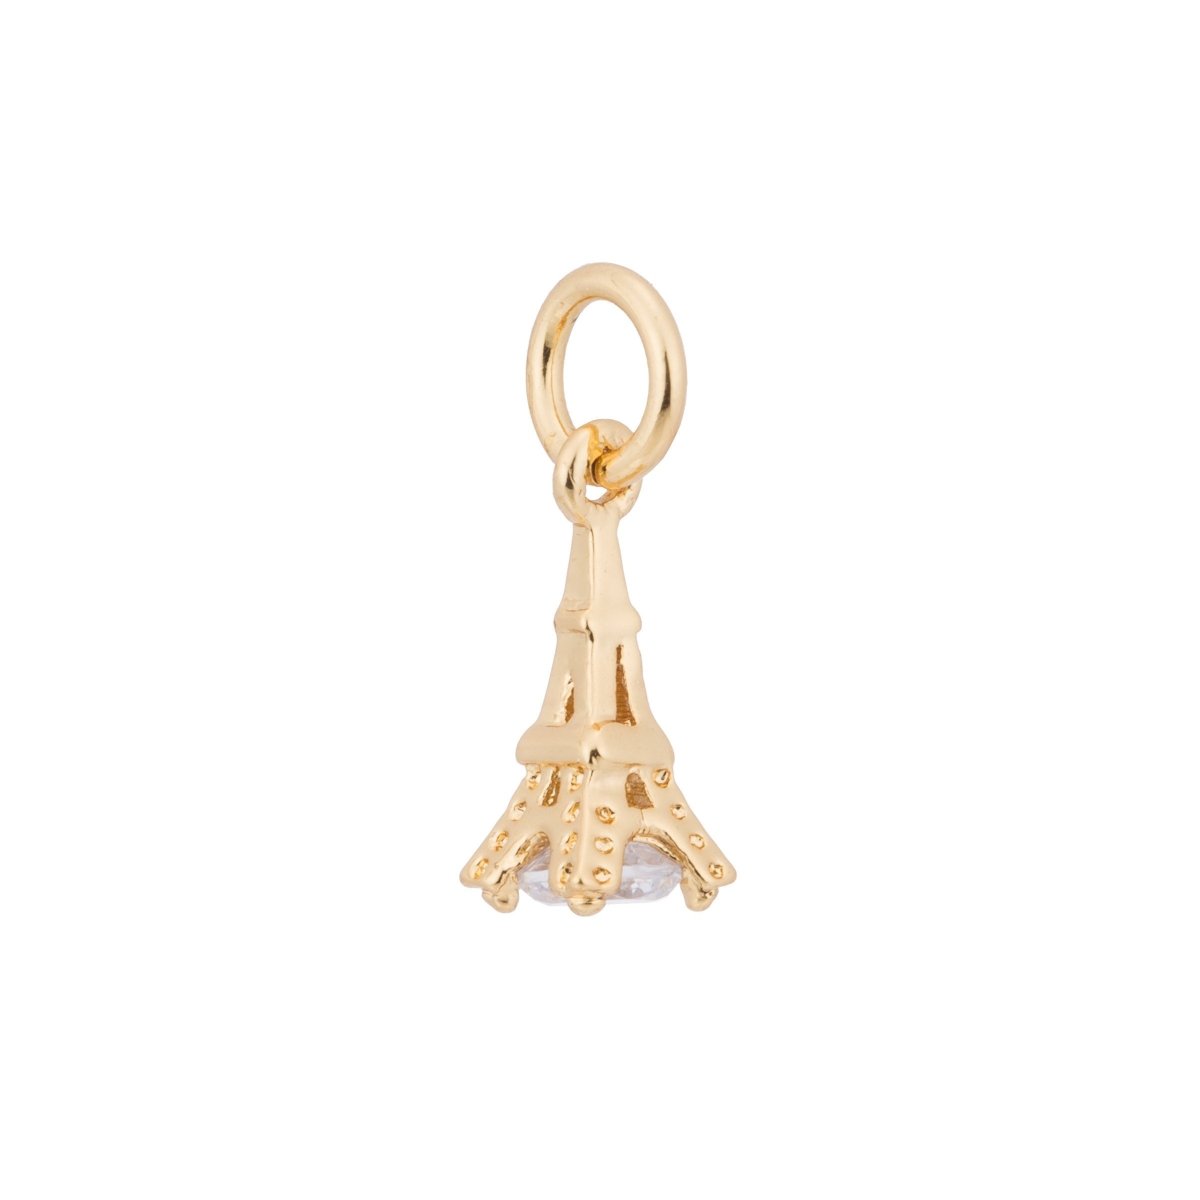 3D Gold Eiffel Tower, Paris, Romantic Love City, DIY Craft Gift Cubic Zirconia Bracelet Charm Bead Findings Pendant For Jewelry Making, C-184 - DLUXCA